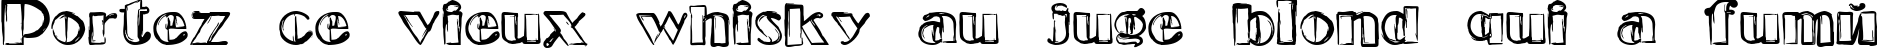 Пример написания шрифтом Etude текста на французском